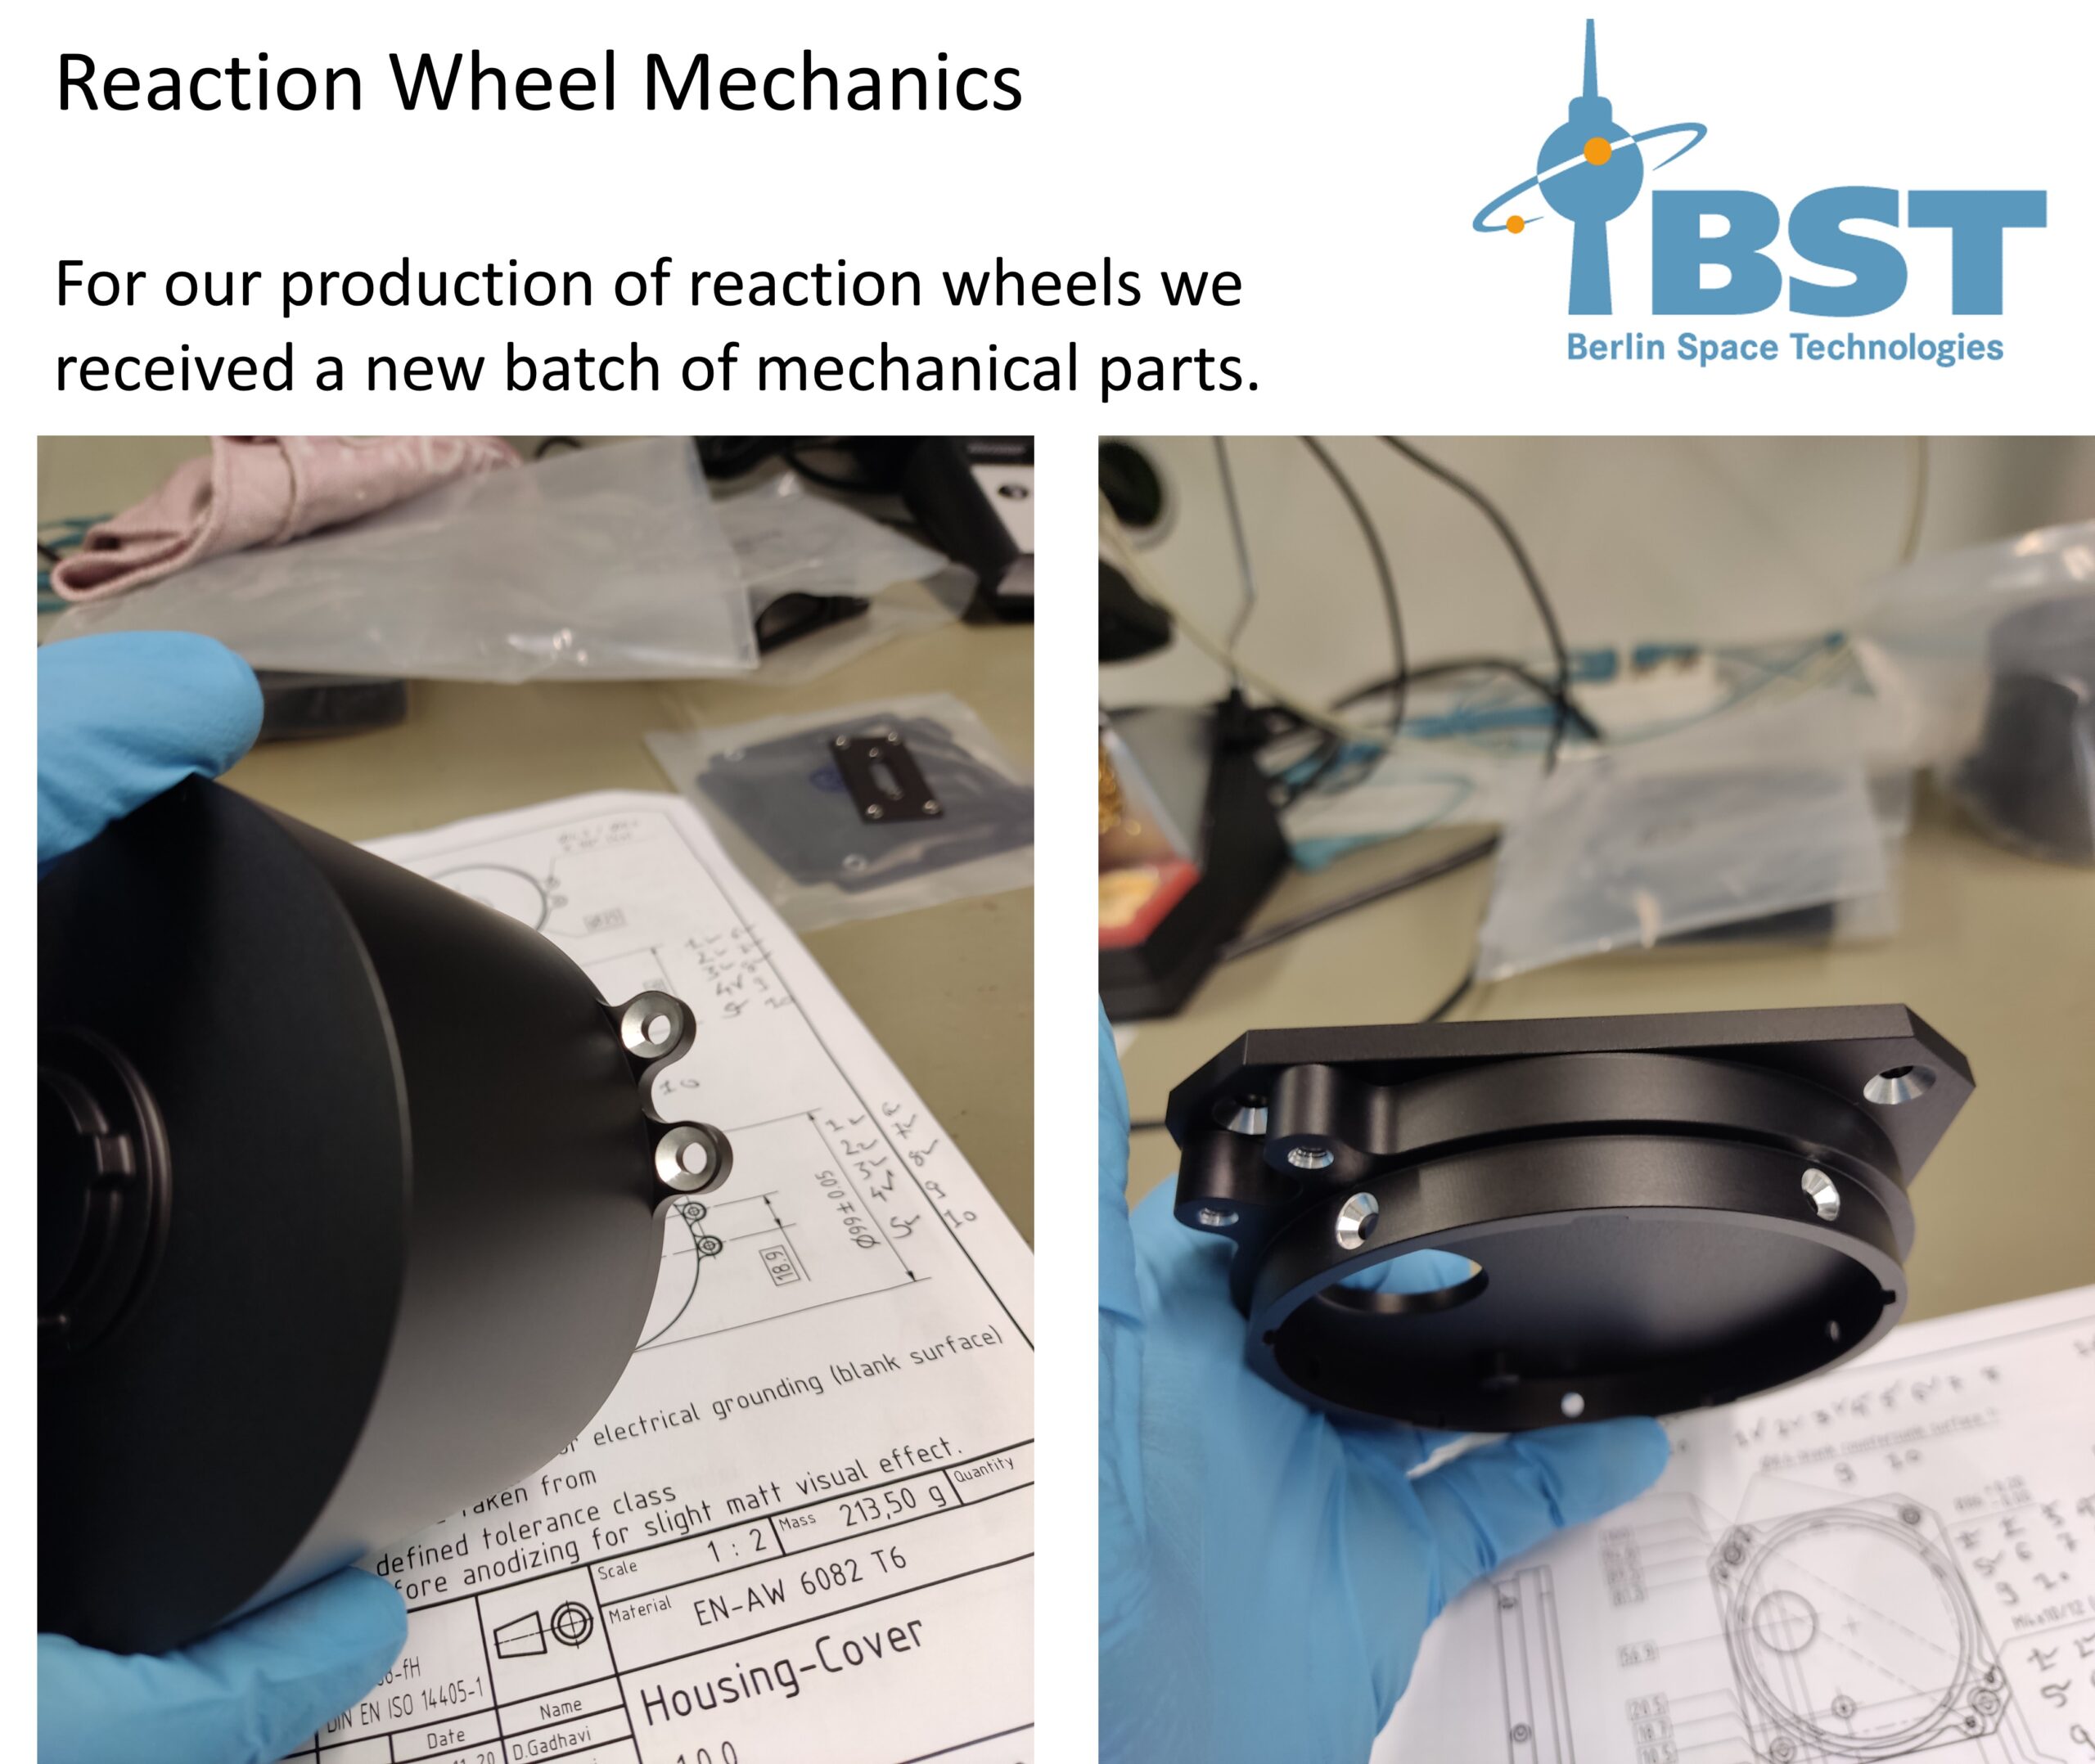 Reaction Wheel Mechanics